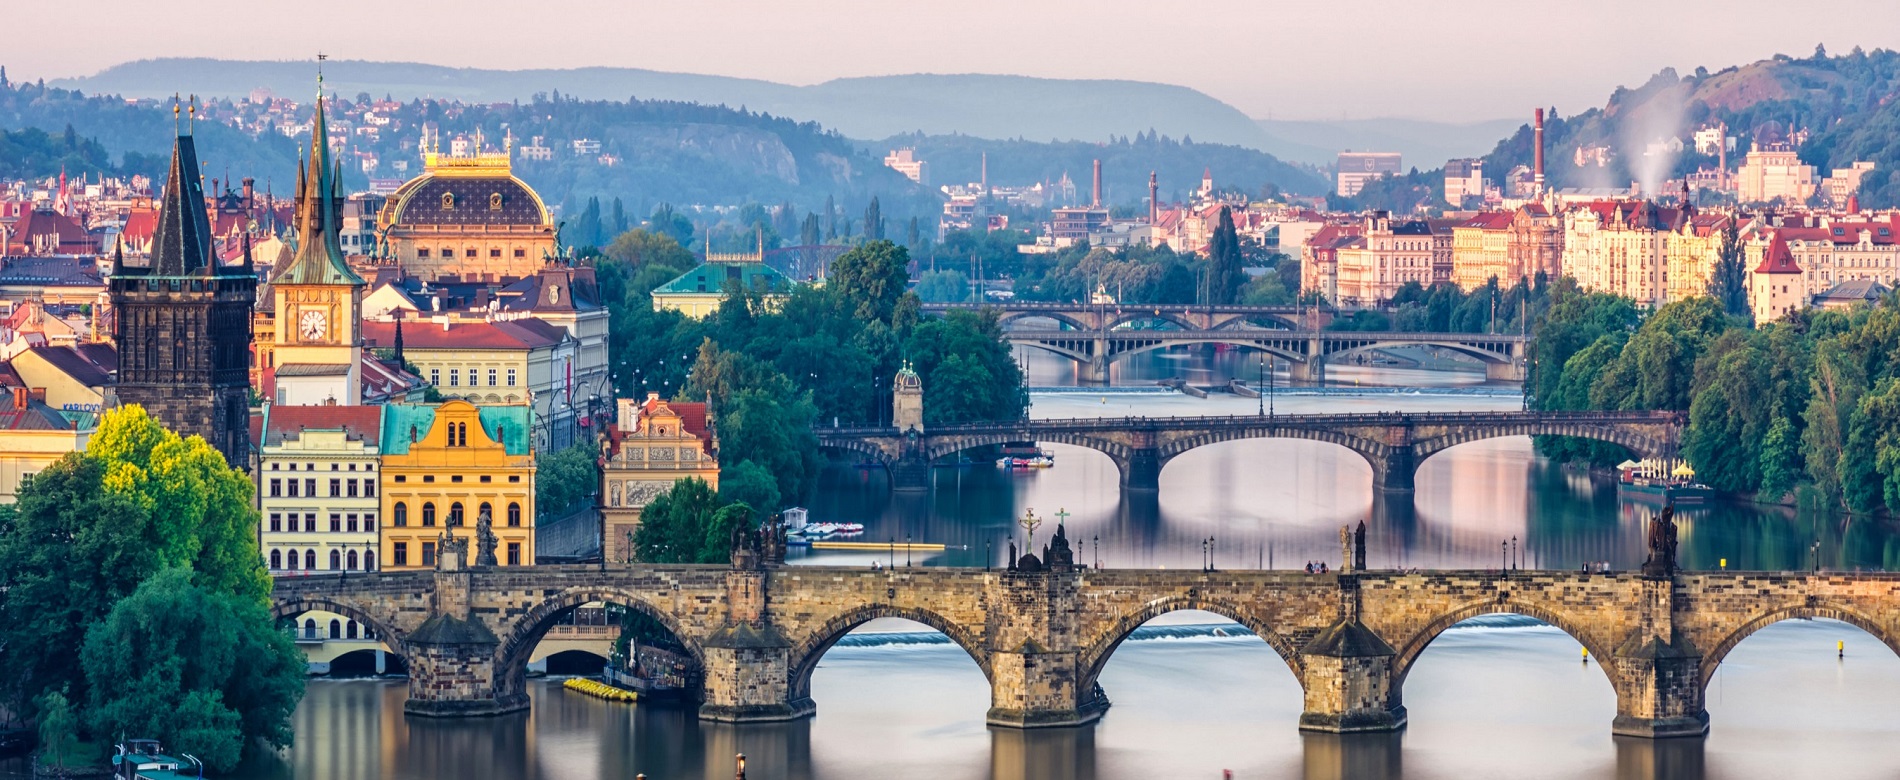 Prague's Bridges crossing over the Vltava River.